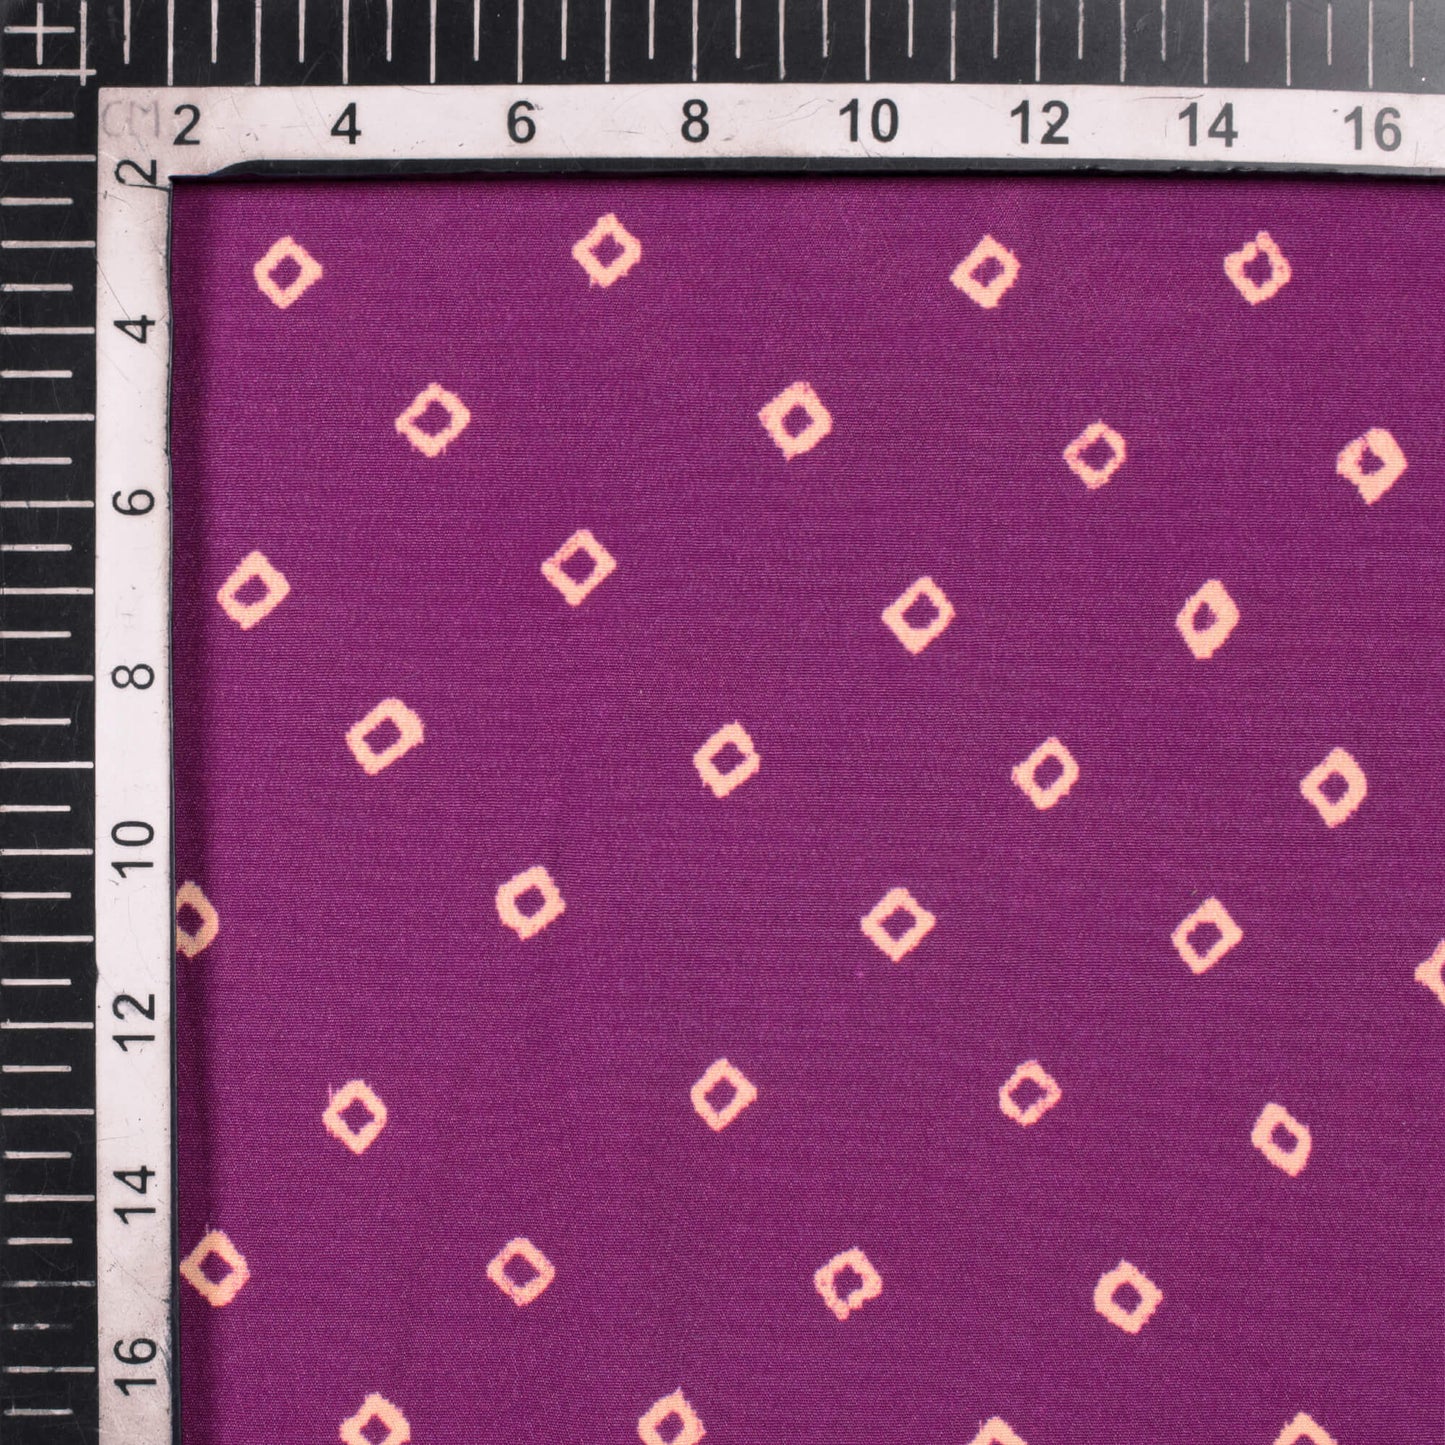 Purple And Cream Bandhani Pattern Digital Print Crepe Satin Fabric